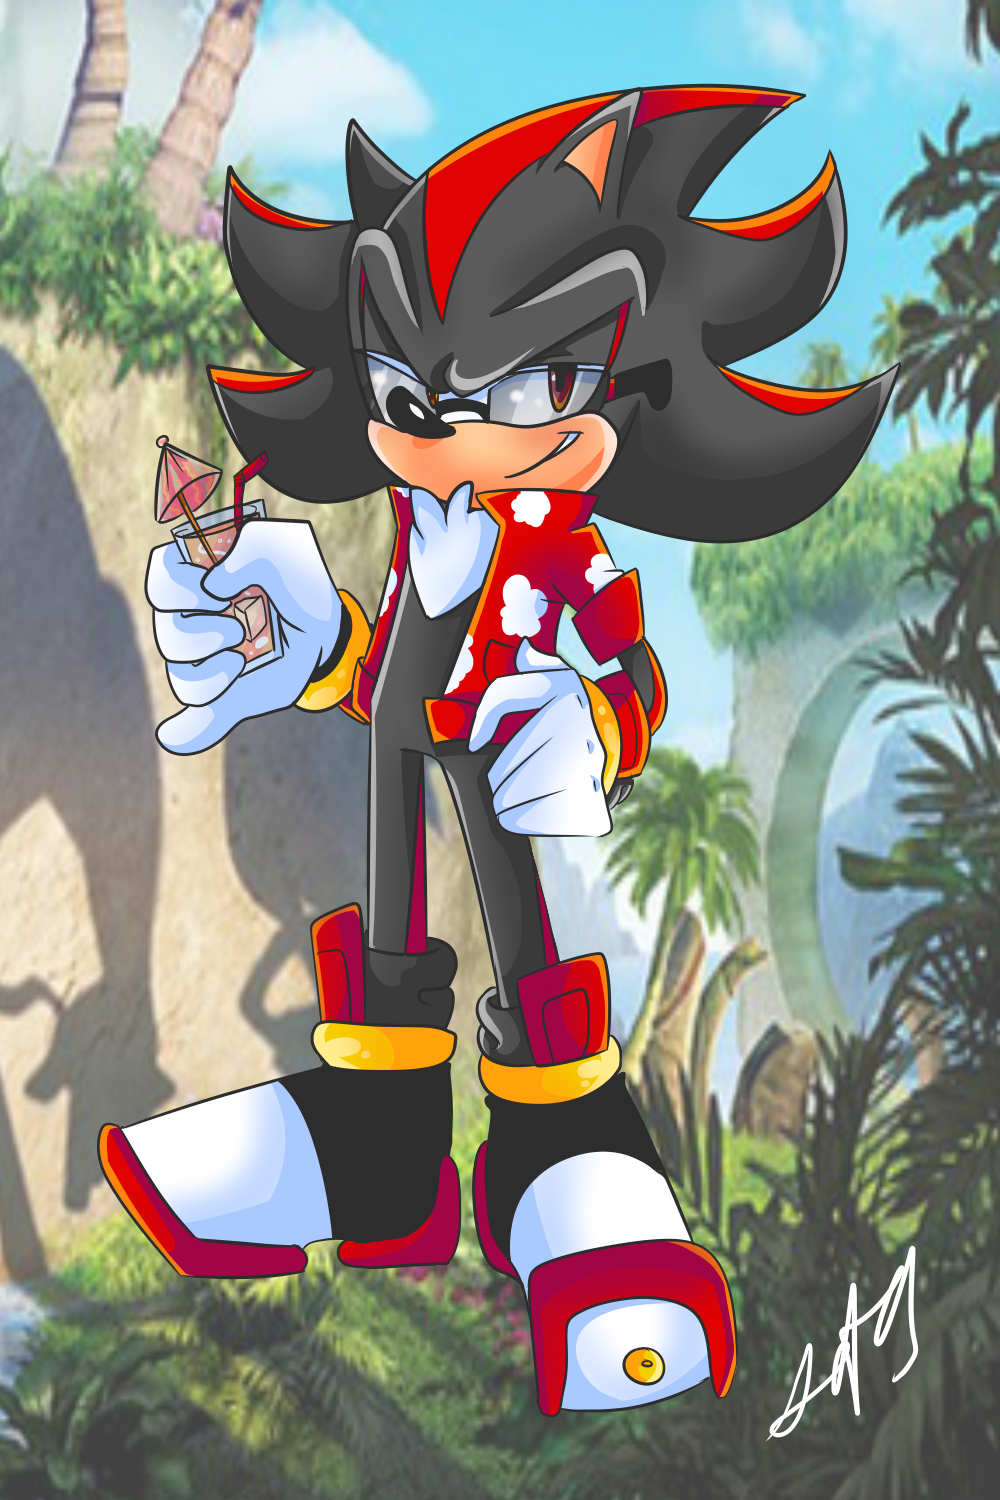 General Sonic The Hedgehog thread.